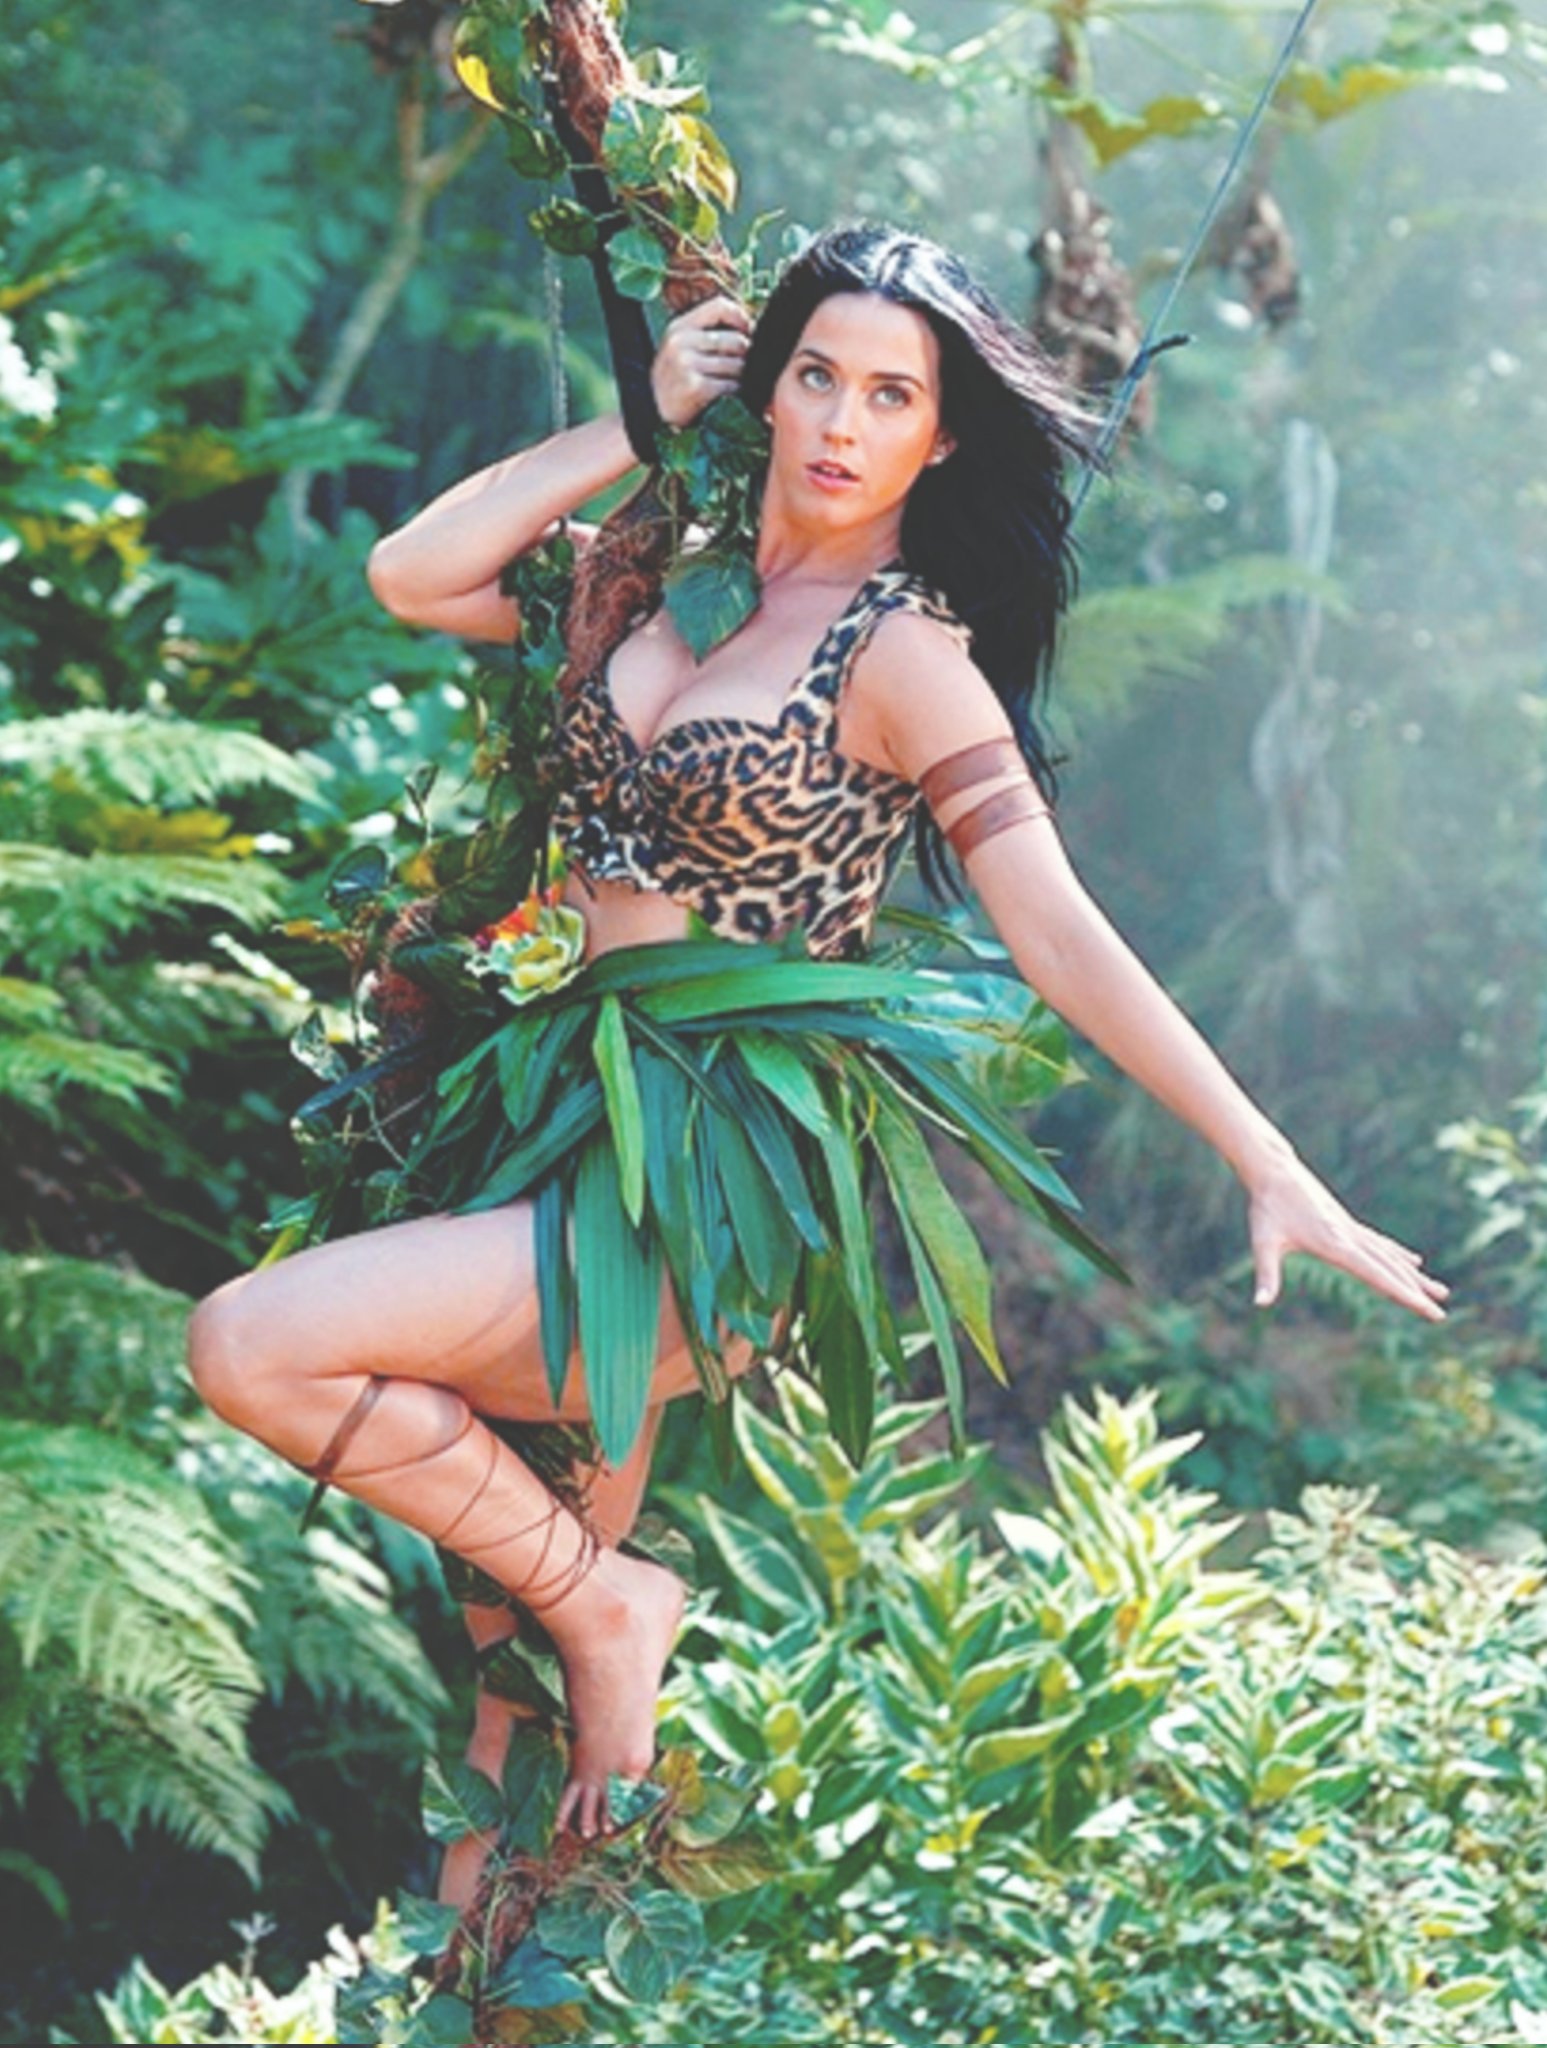 Roar by Katy Perry has now surpassed 900 MILLION streams on